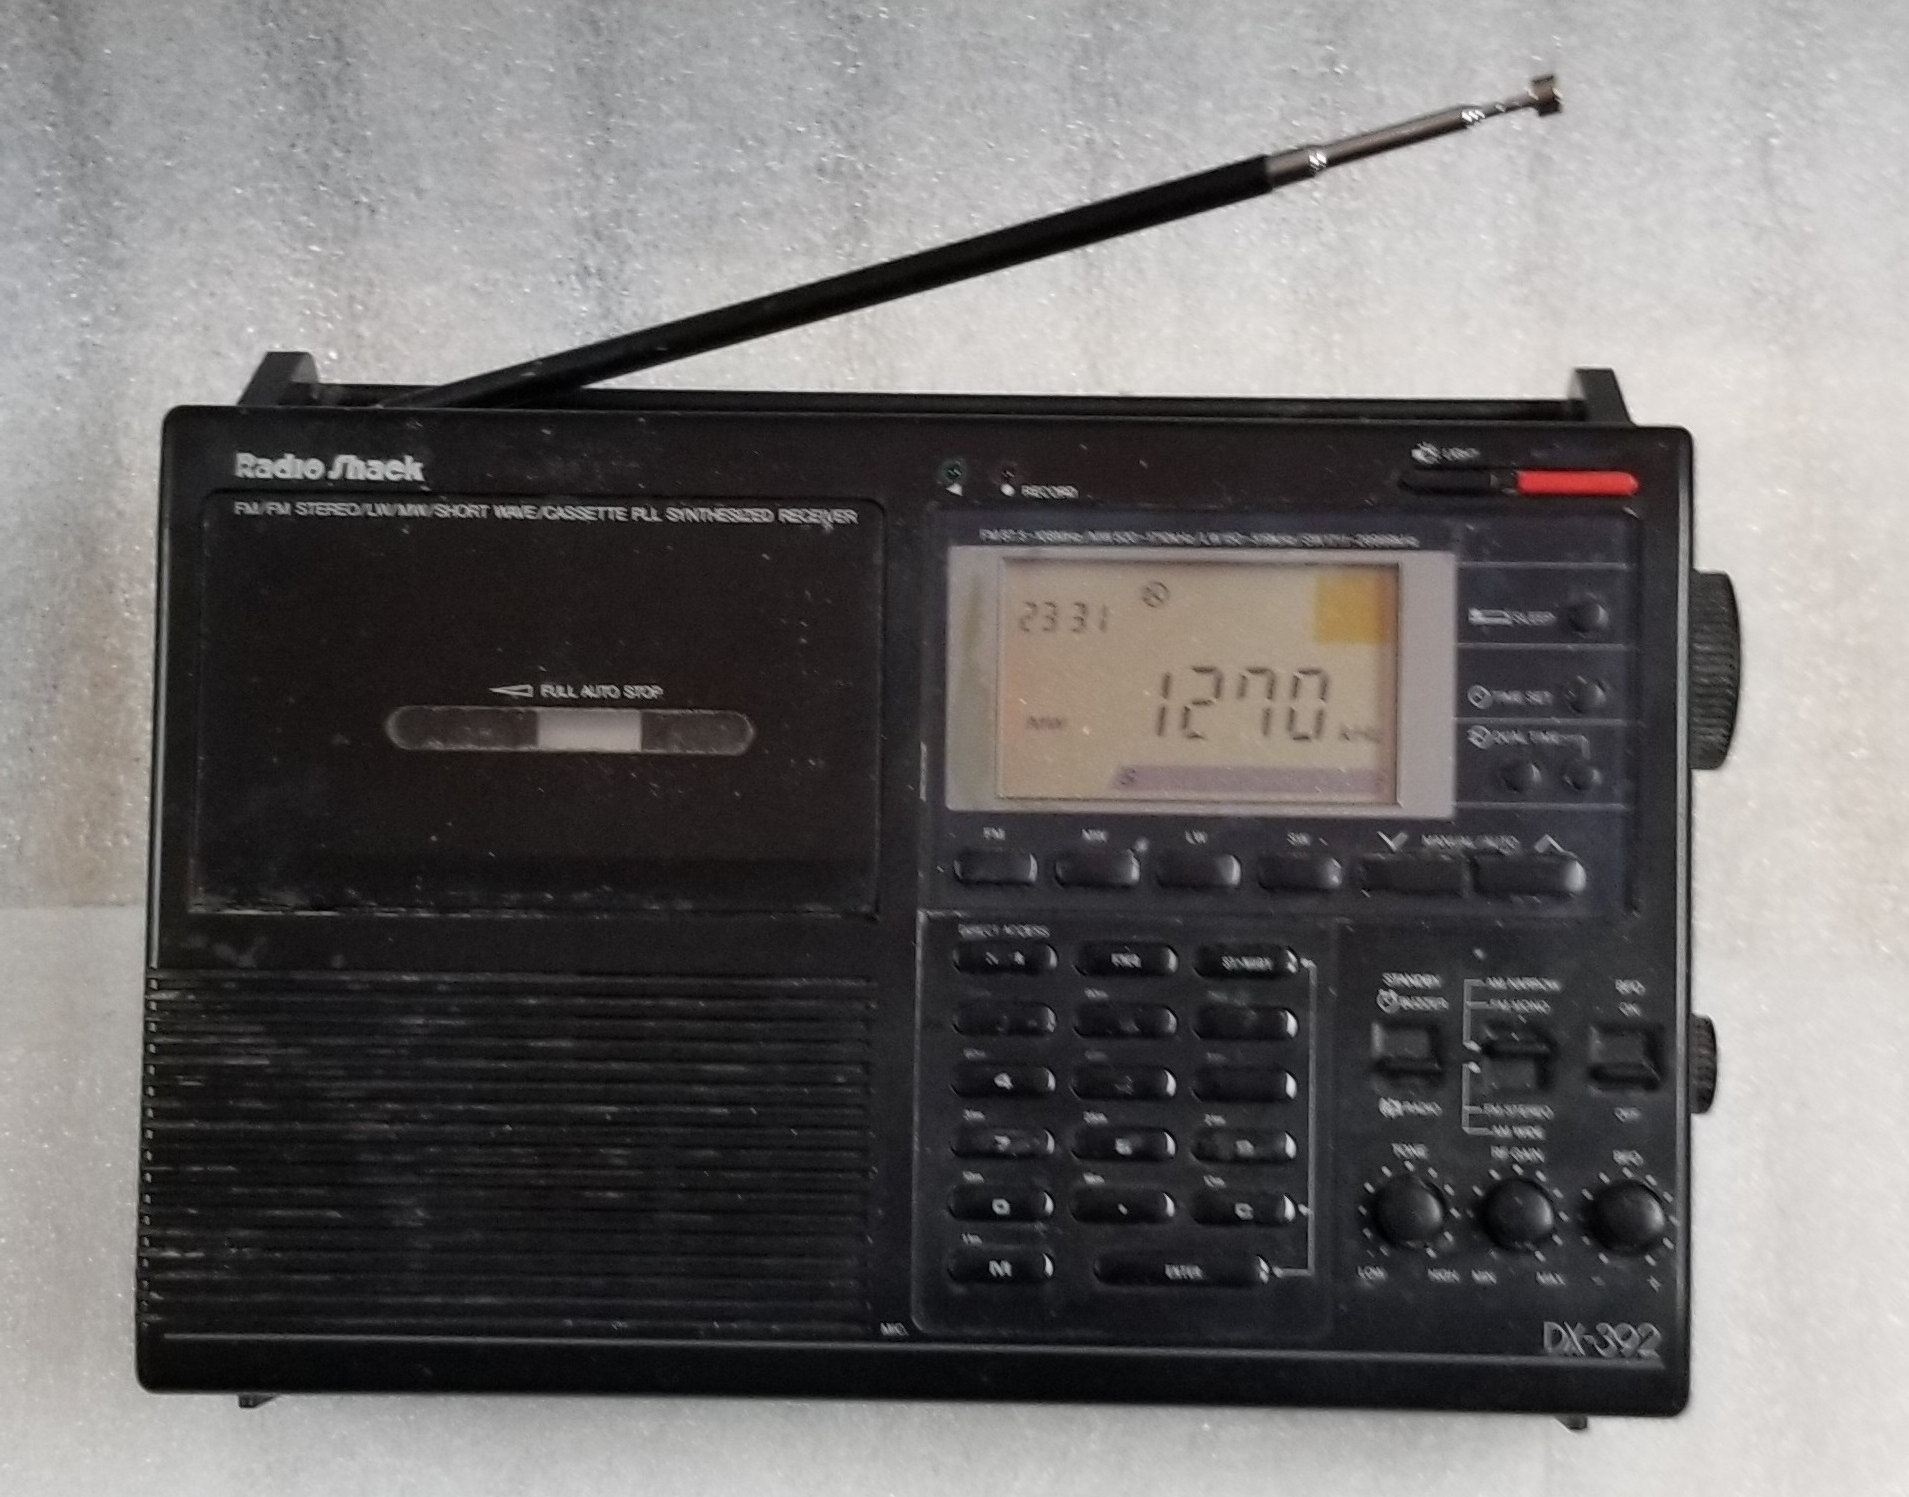 Radio Shack DX-392 Shortwave/am/fm Radio Cassette Player image